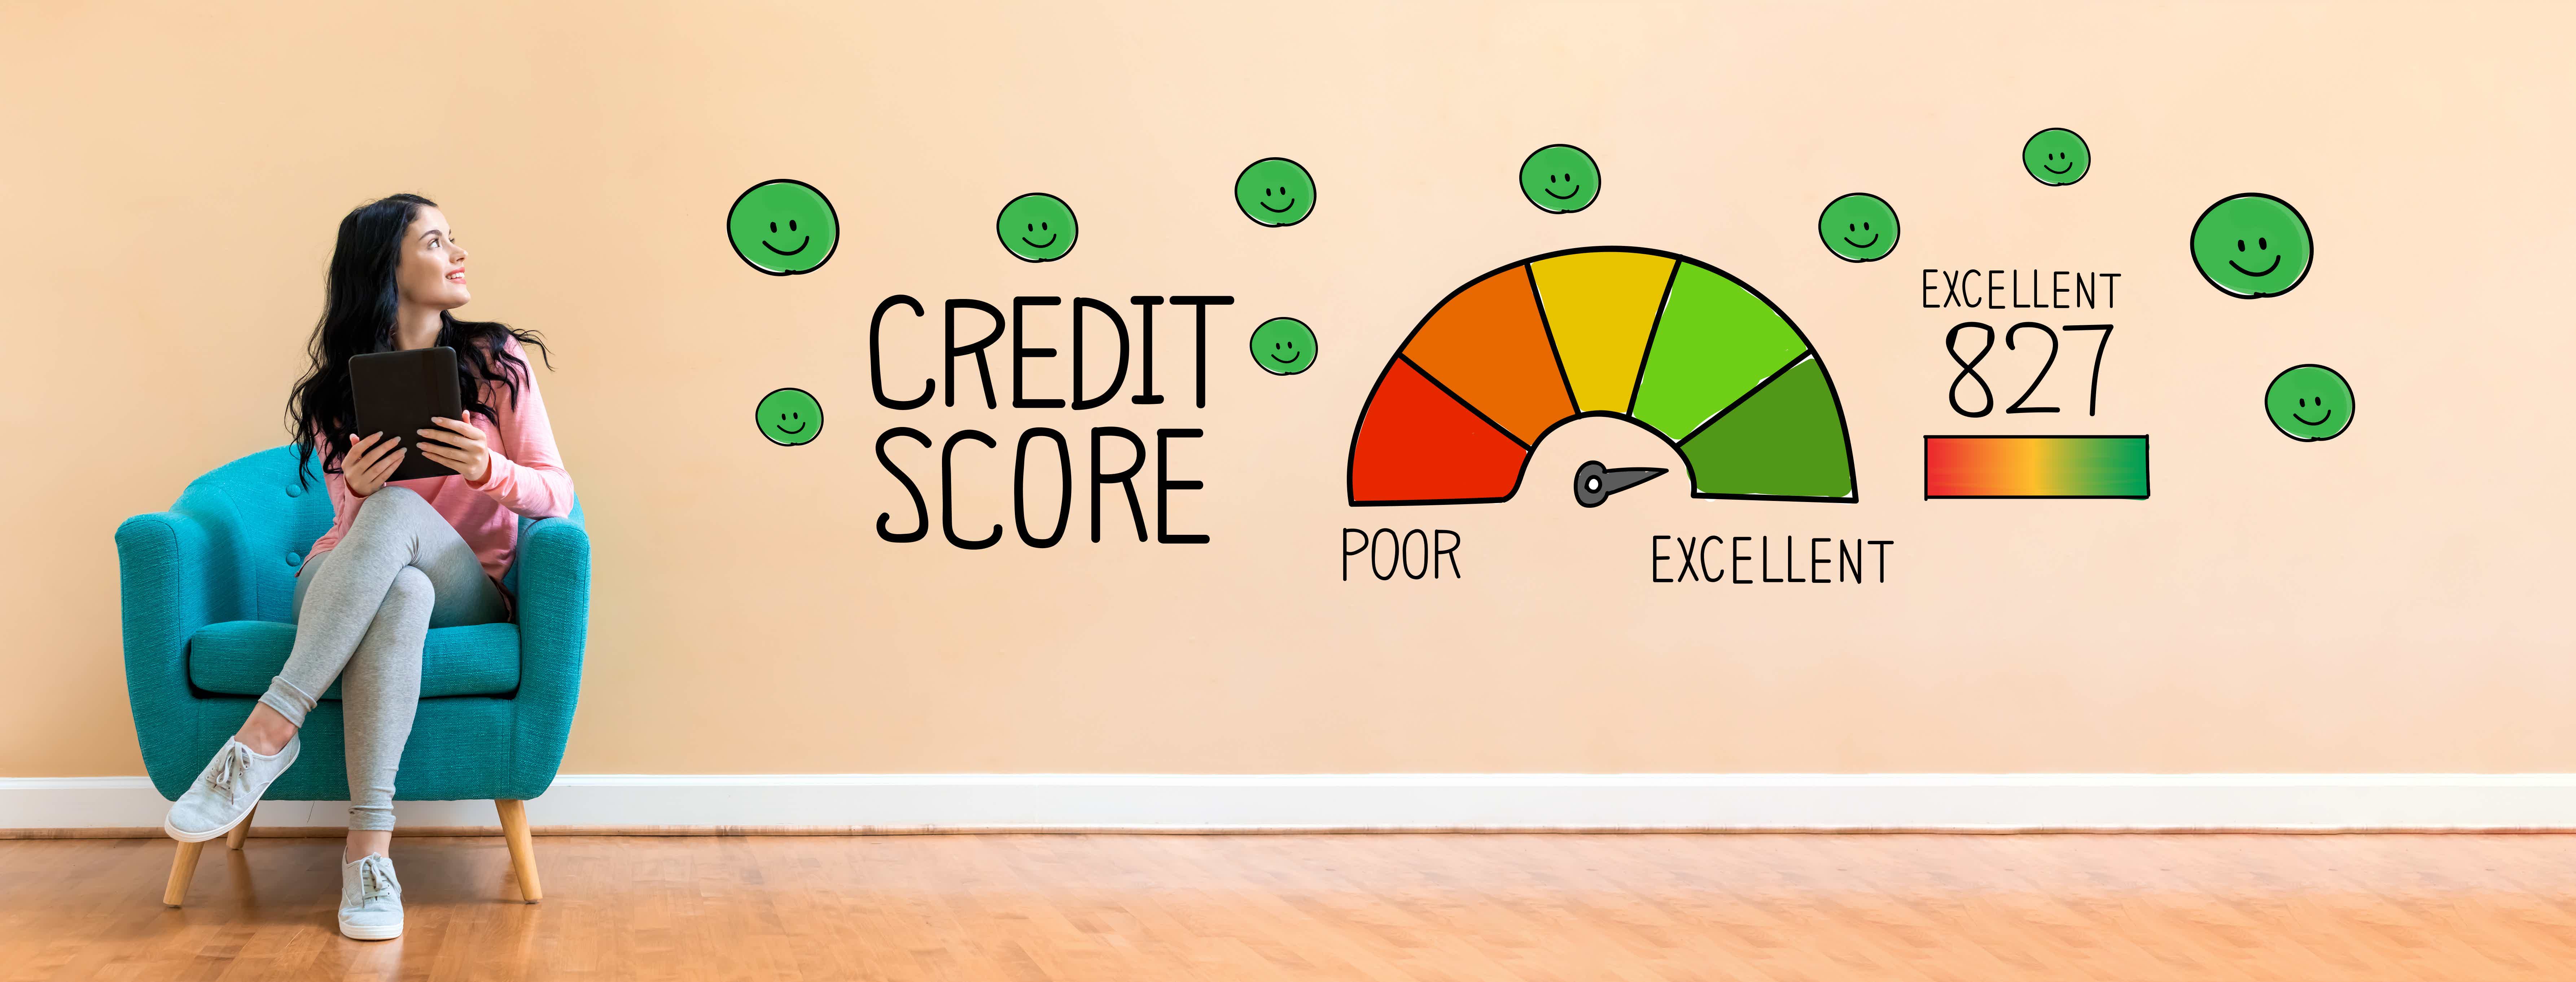 É essencial ter entendimento sobre score de crédito para manter o cadastro positivo perante os órgãos financeiros e conseguir boas vantagens e benefícios ao contratar produtos financeiros. Fonte: Adobe Stock.